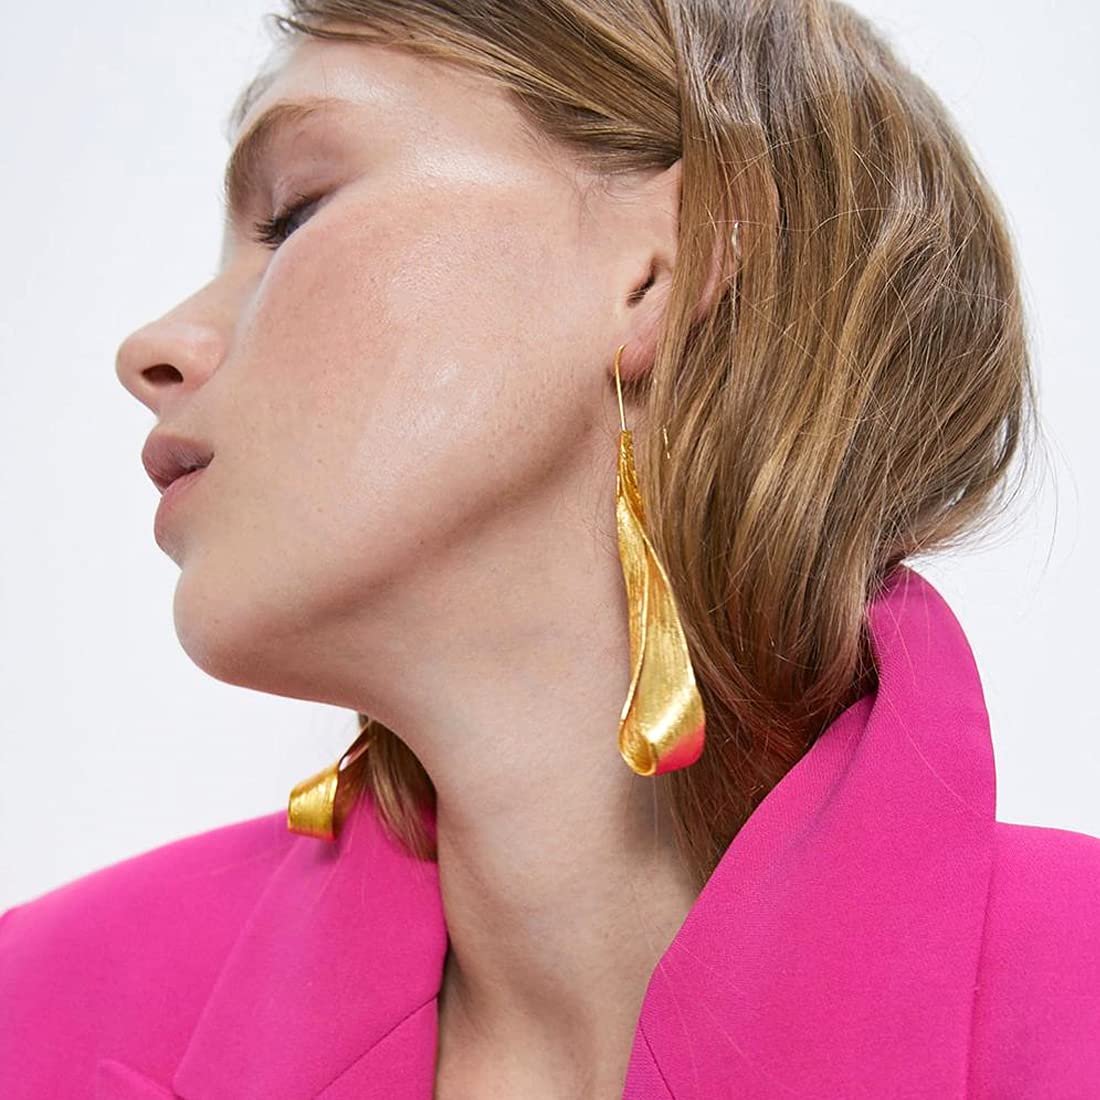 Yellow Chimes Elegant Latest Fashion Geometric Design Studded Crystal Floral Design Dangler Earrings for Women and Girls (Design 6)